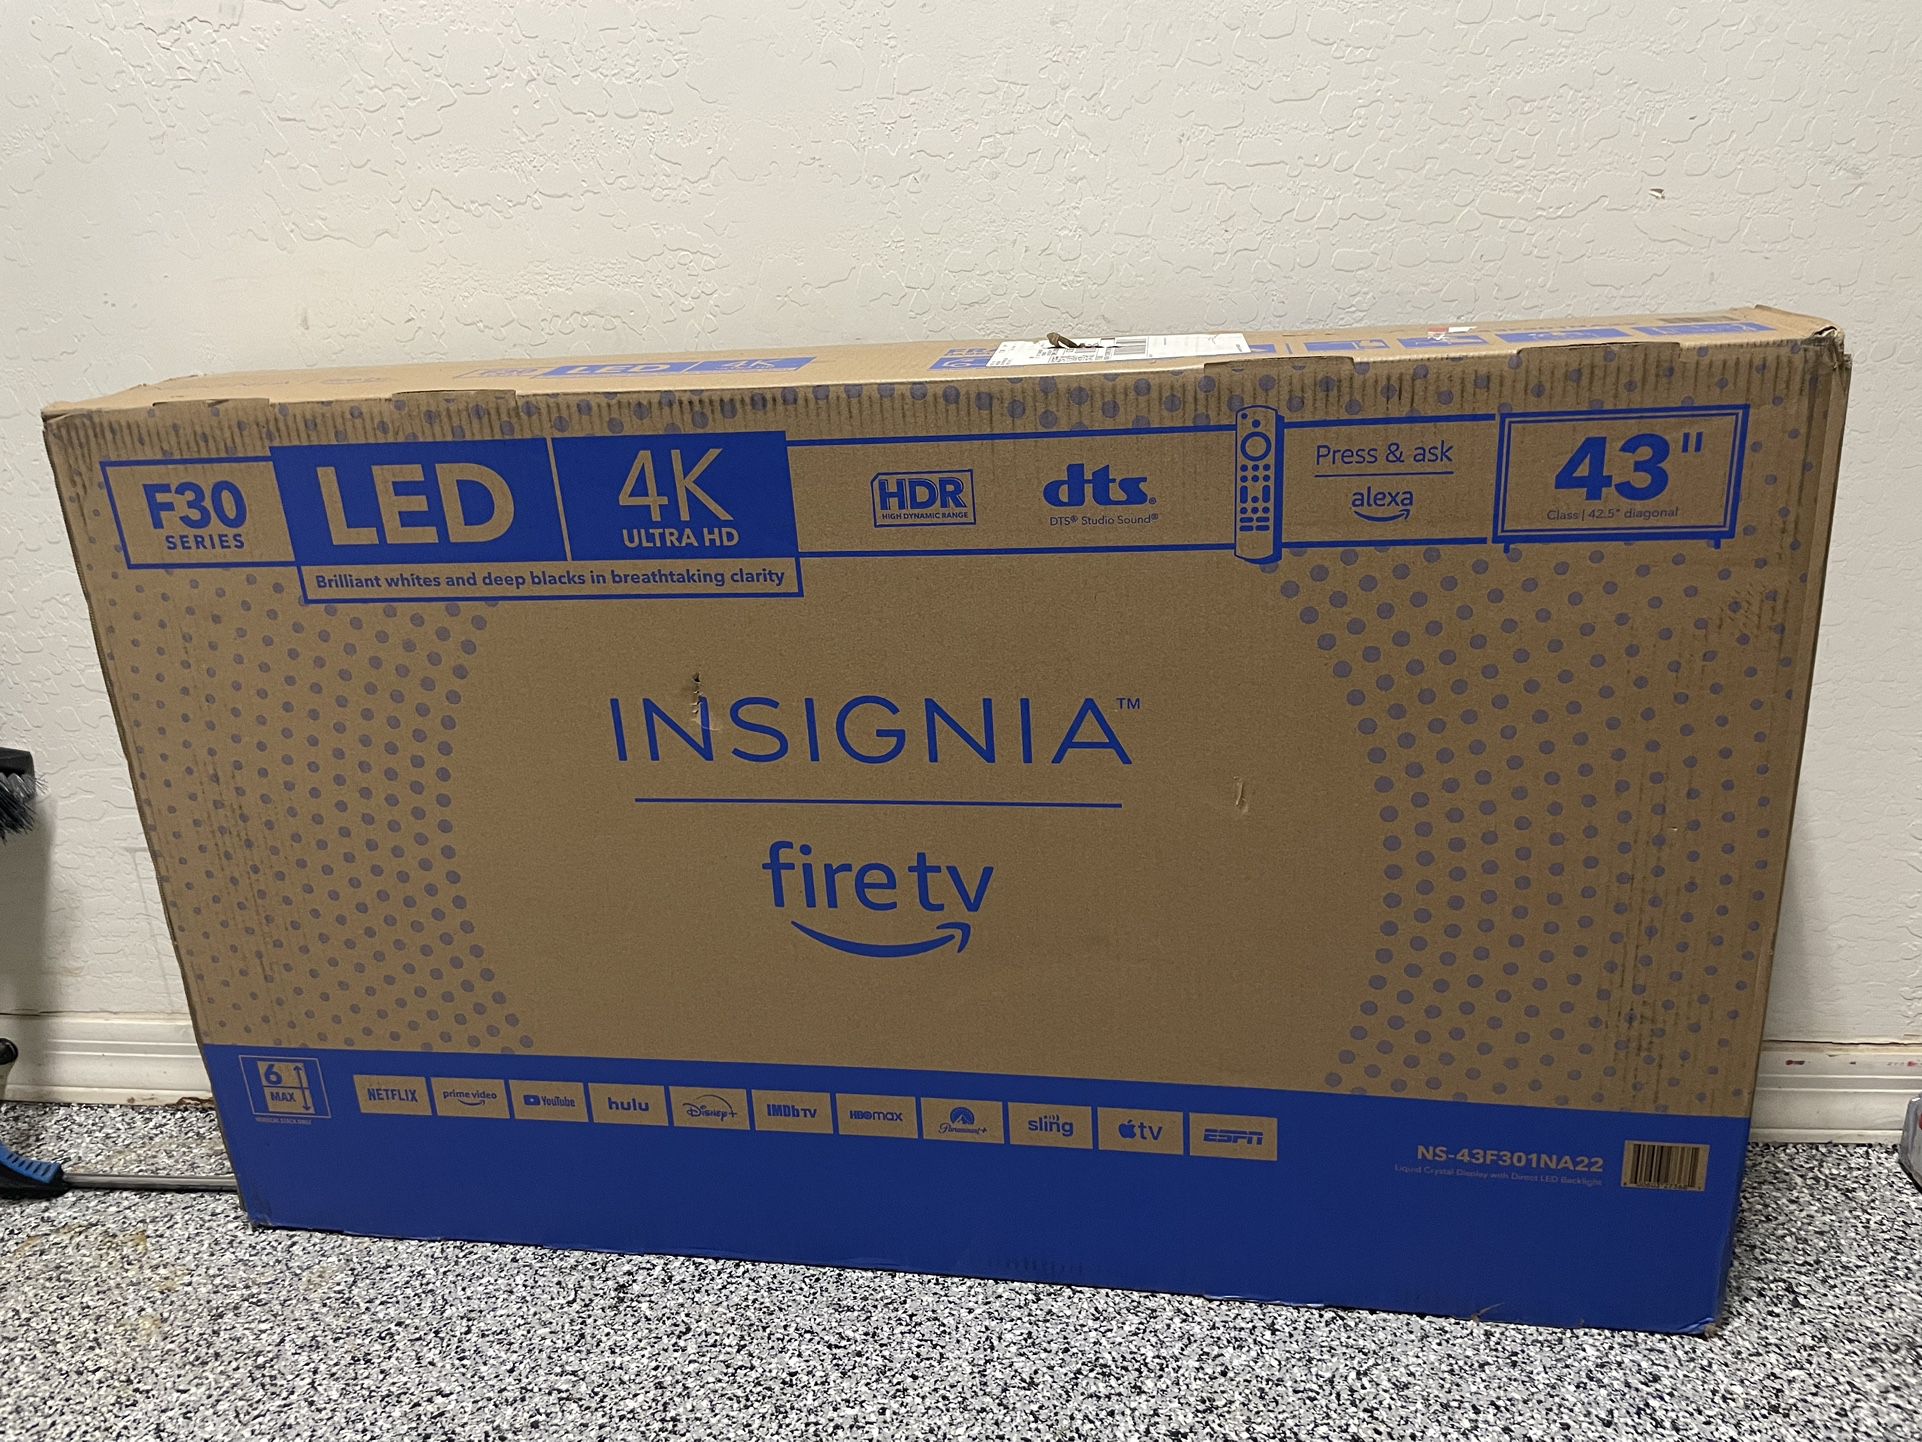 Insignia 43" Class F30 LED 4K UHD Smart Fire tV